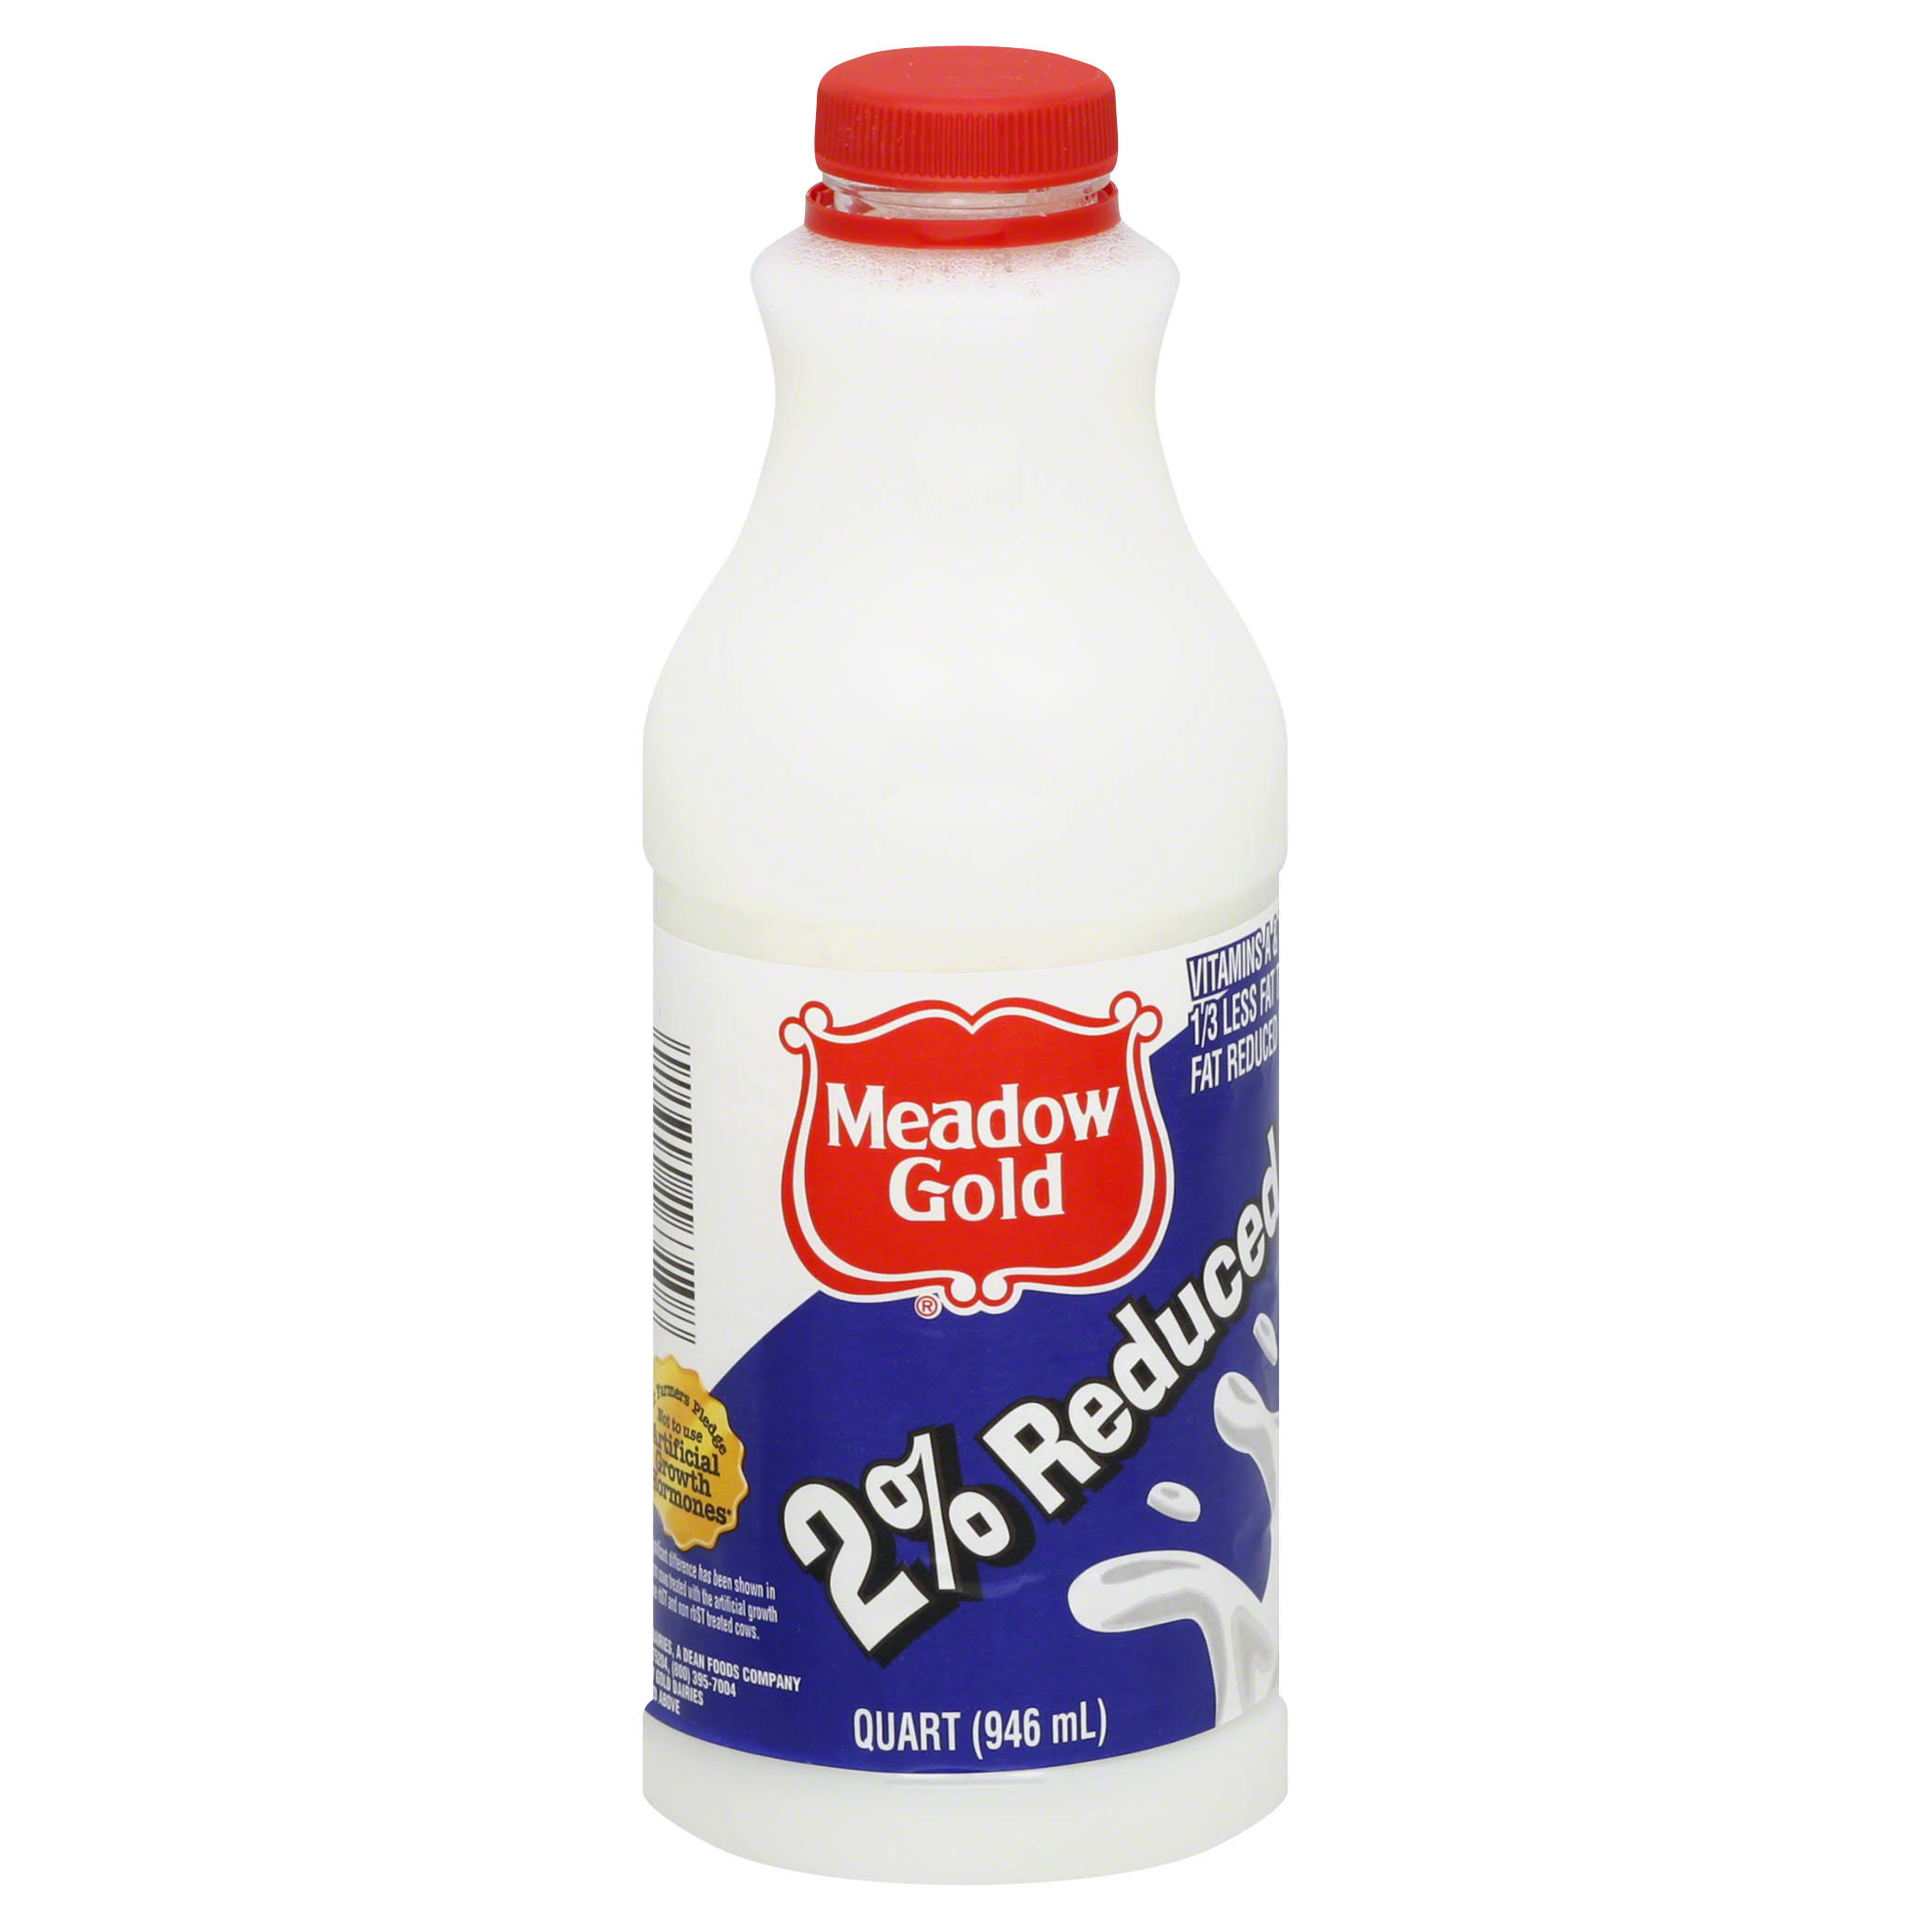 Meadow Gold Milk, Reduced Fat, 2% Milkfat - 1 qt